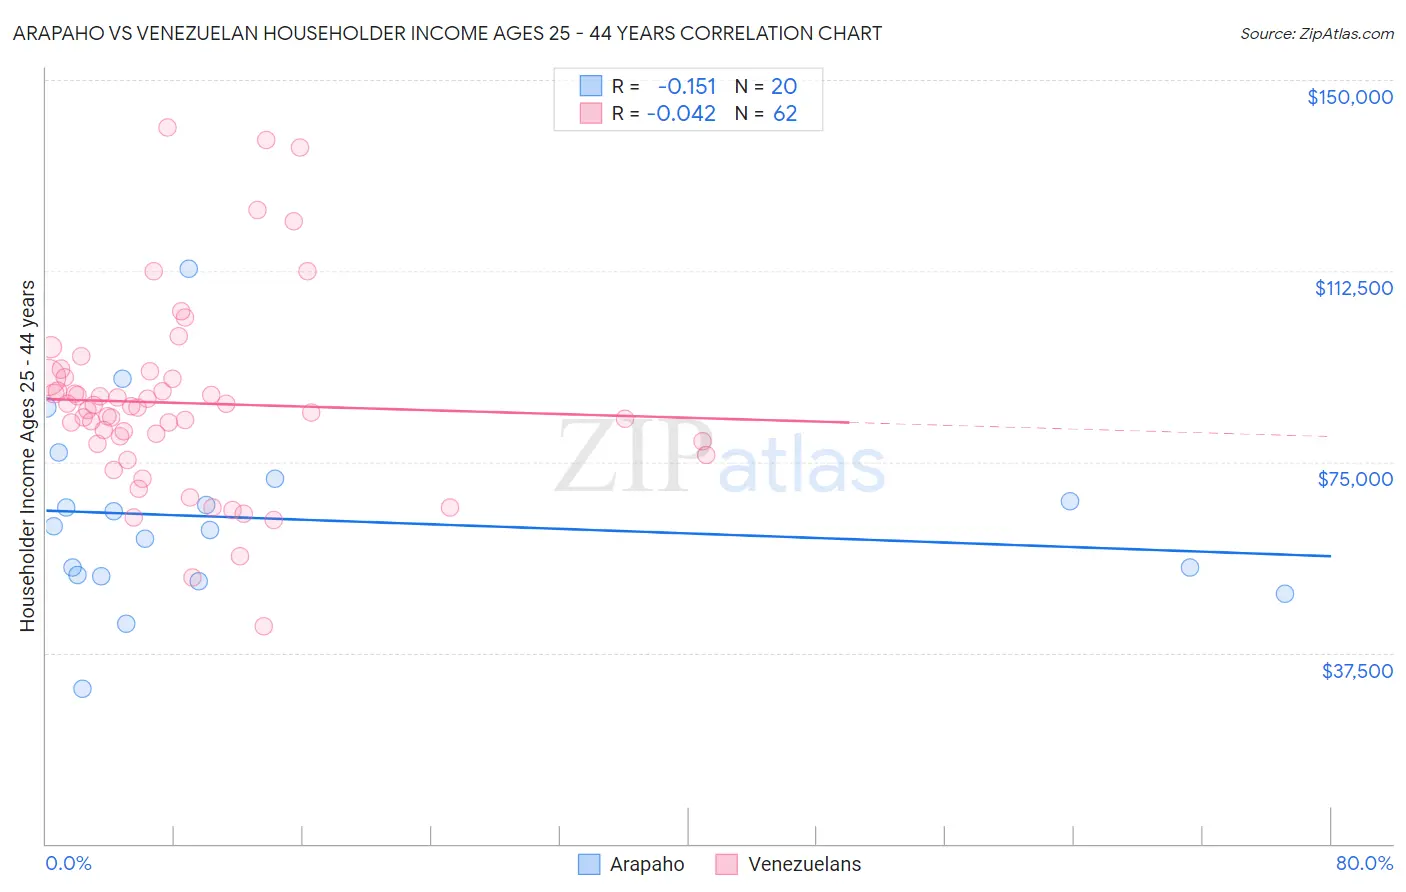 Arapaho vs Venezuelan Householder Income Ages 25 - 44 years